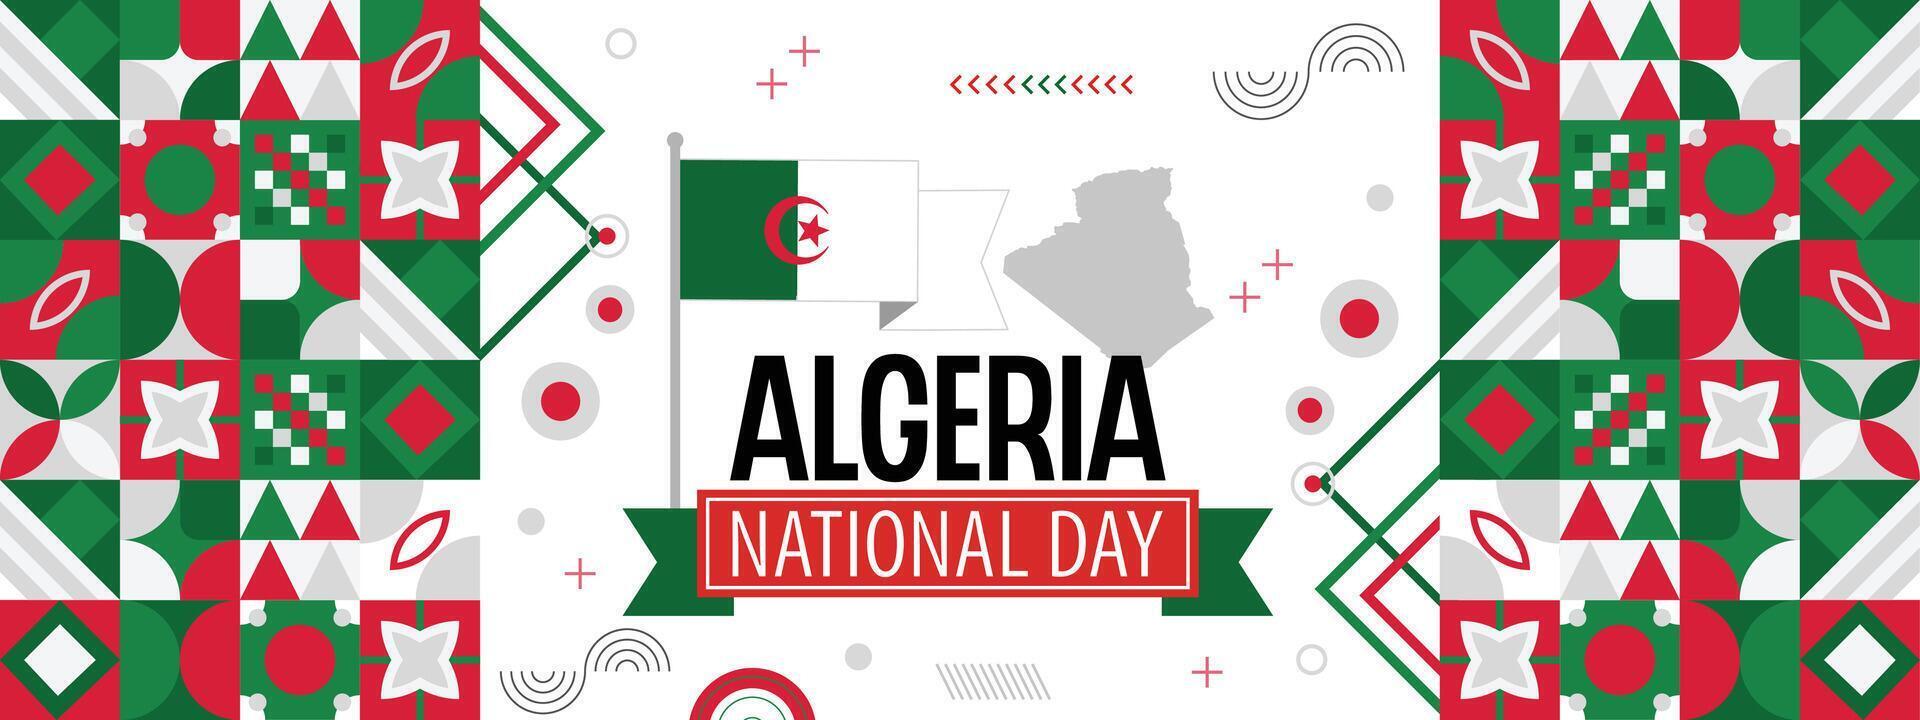 ALGERIA national day banner Abstract celebration geometric decoration design graphic art web background, flag illustration vector